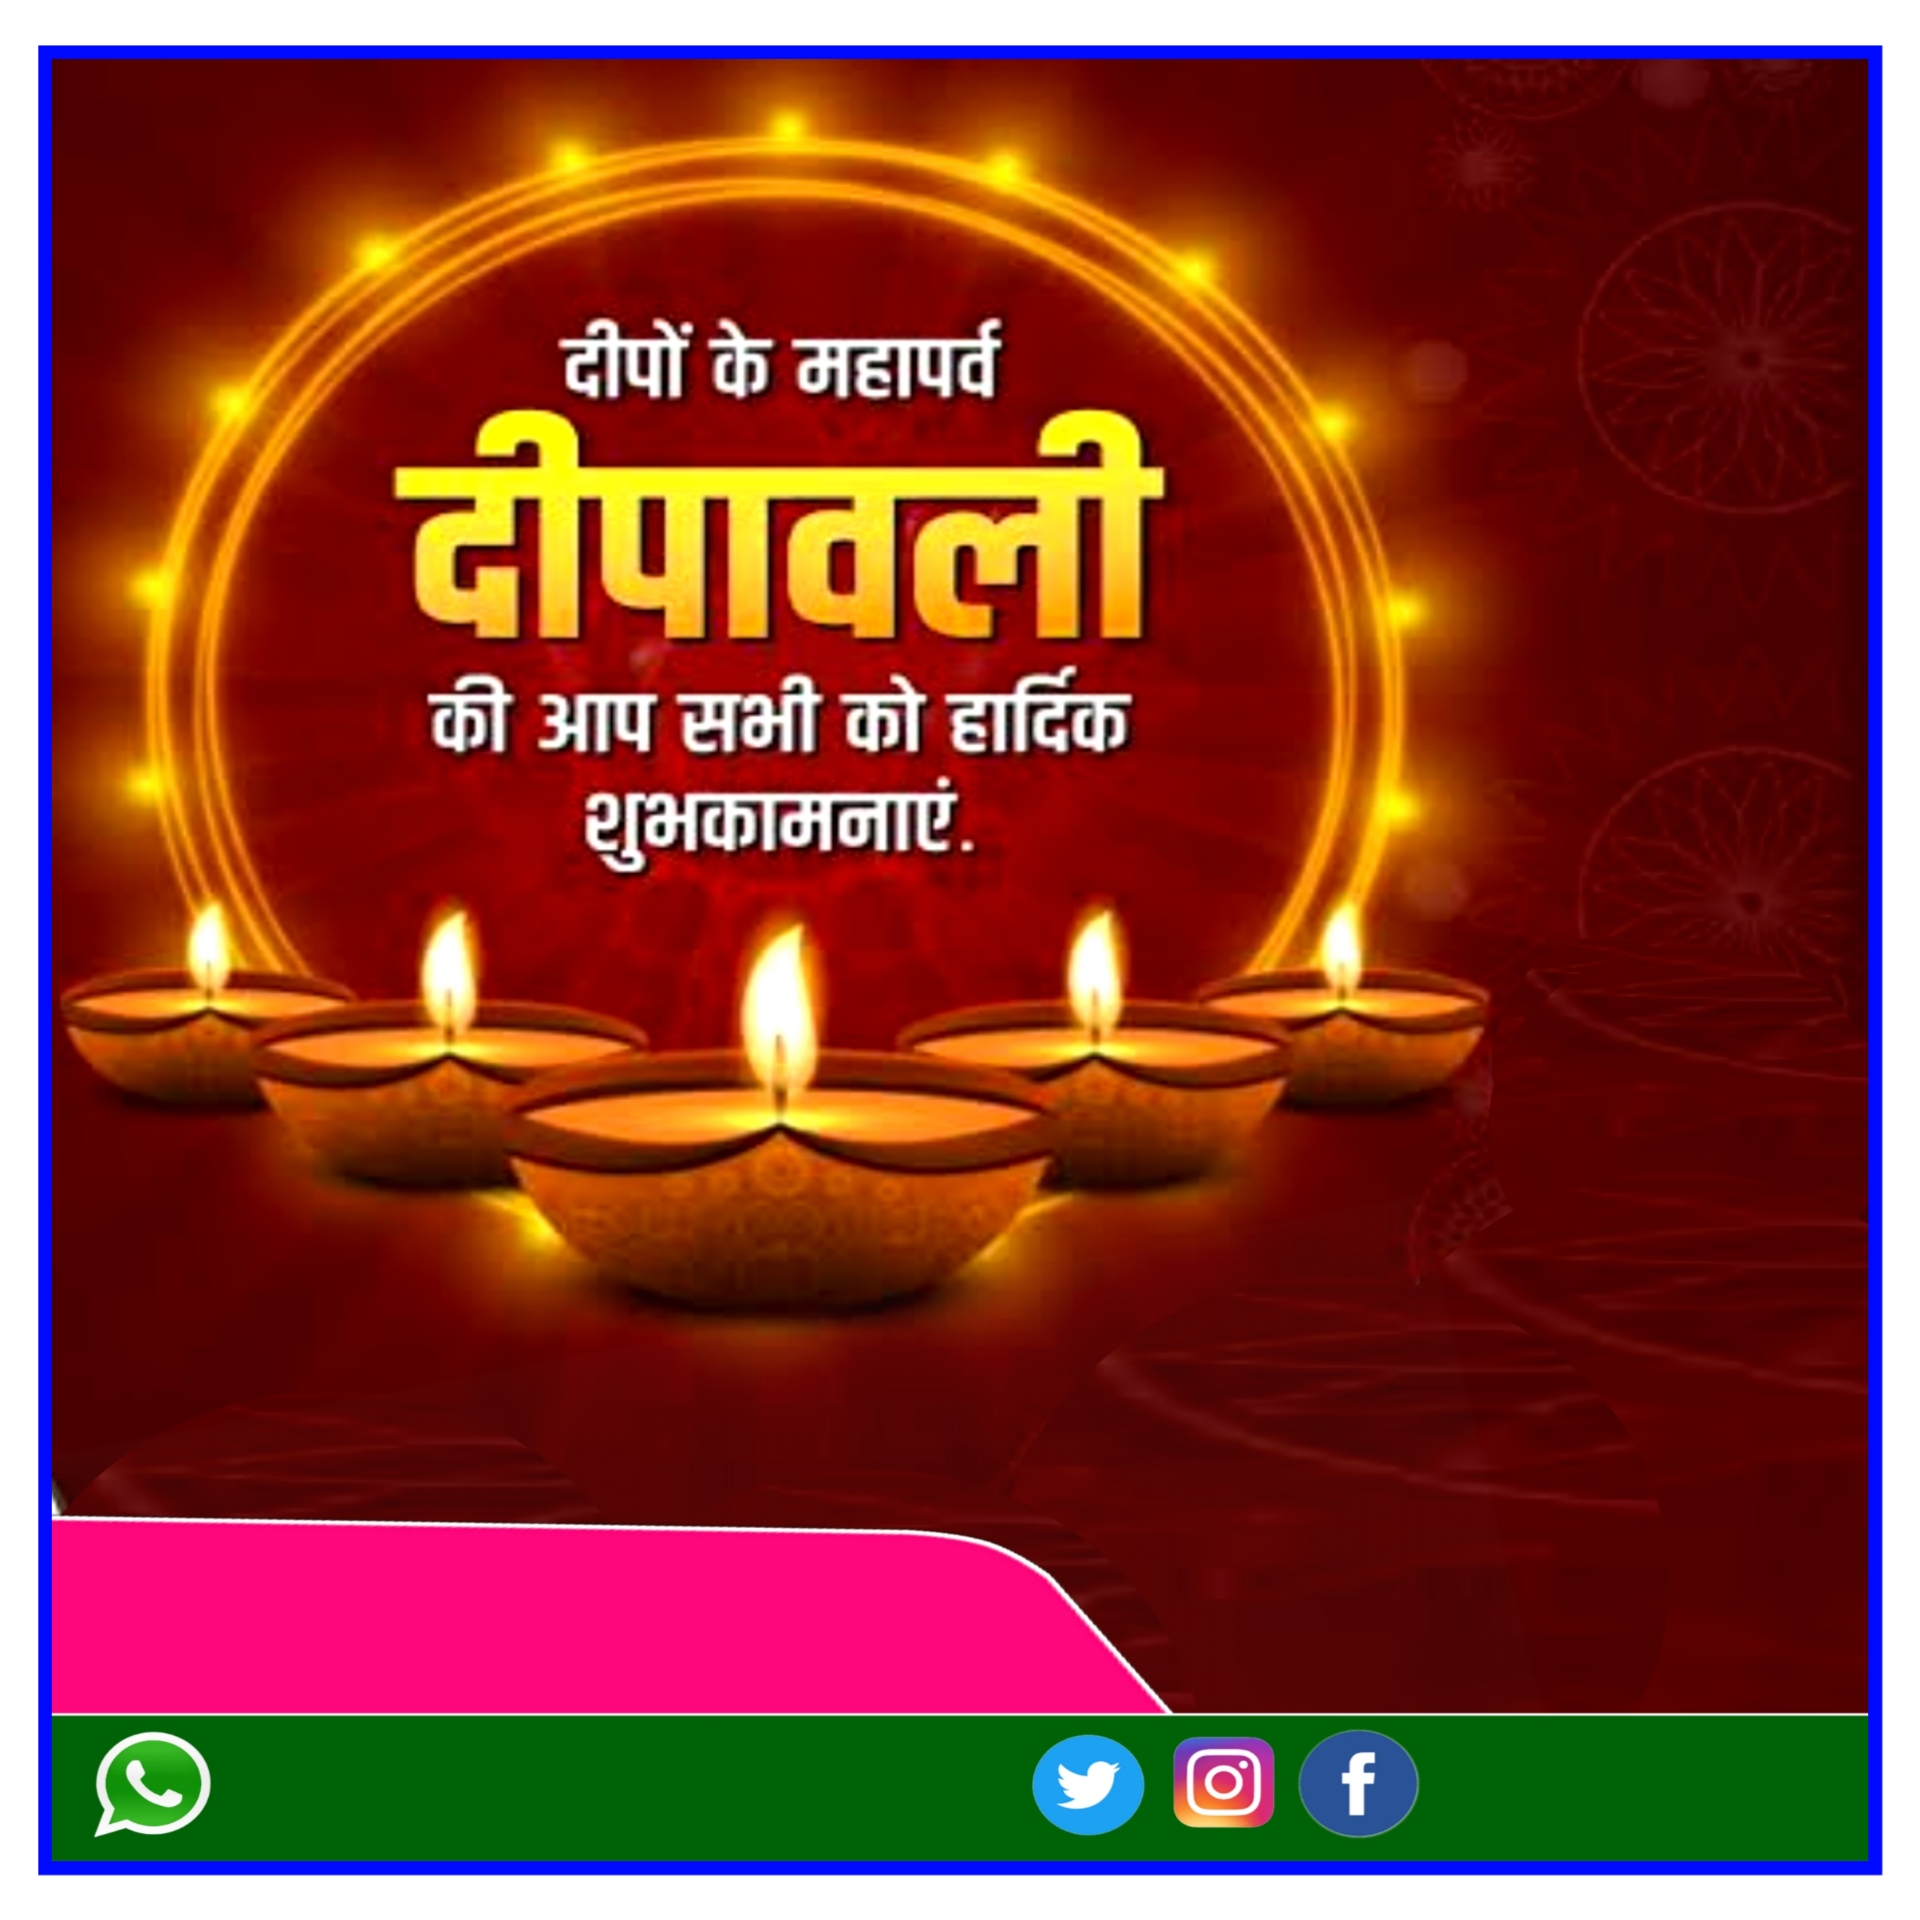 Diwali poster background